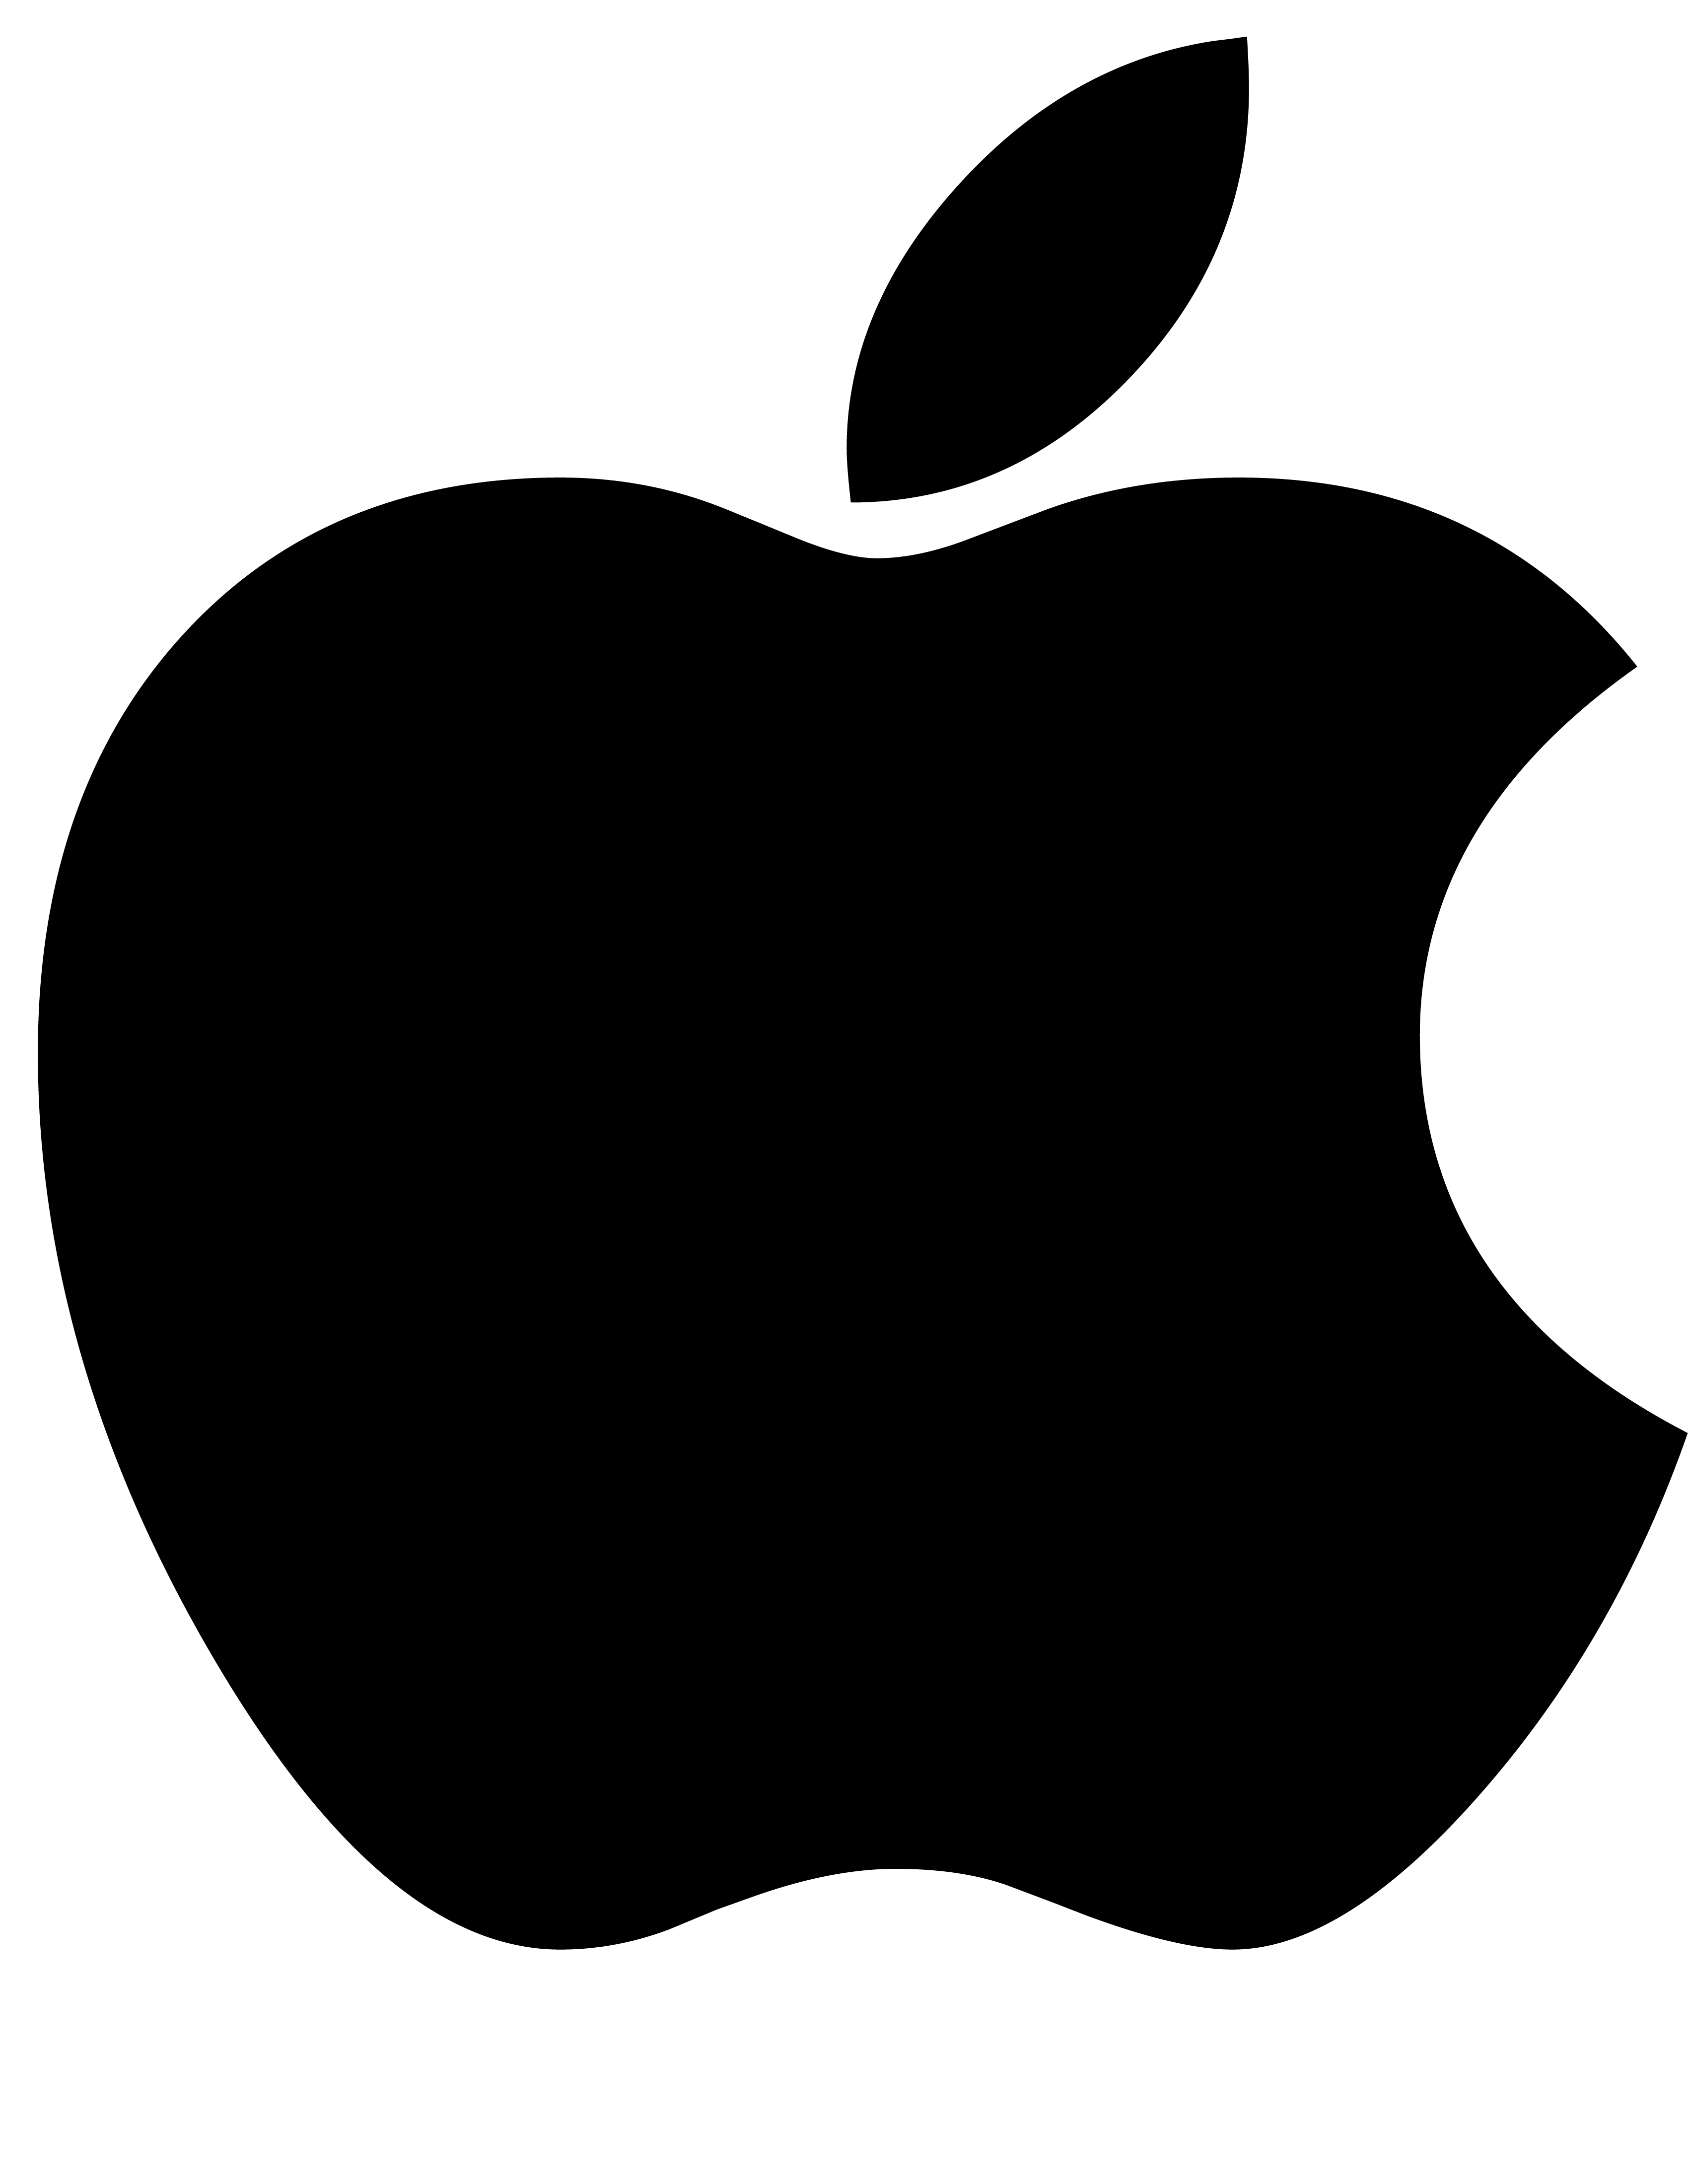 giant-apple-logo-bw